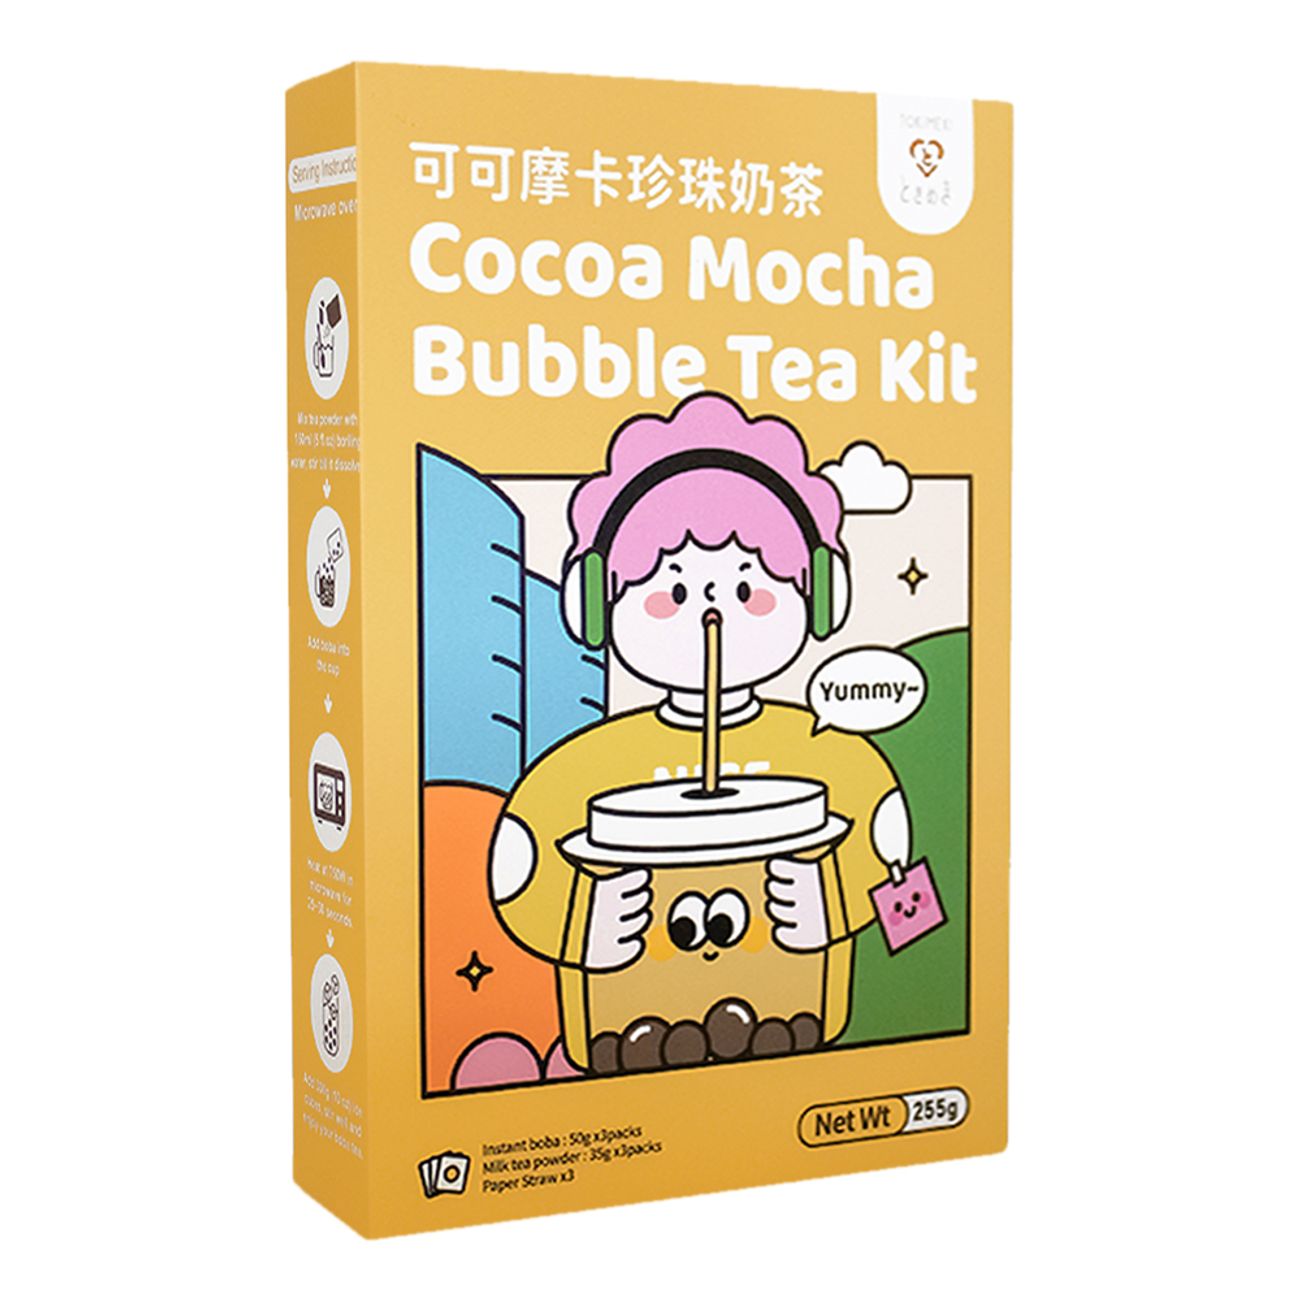 tokimeki-cocoa-matcha-bubble-tea-kit-99251-1